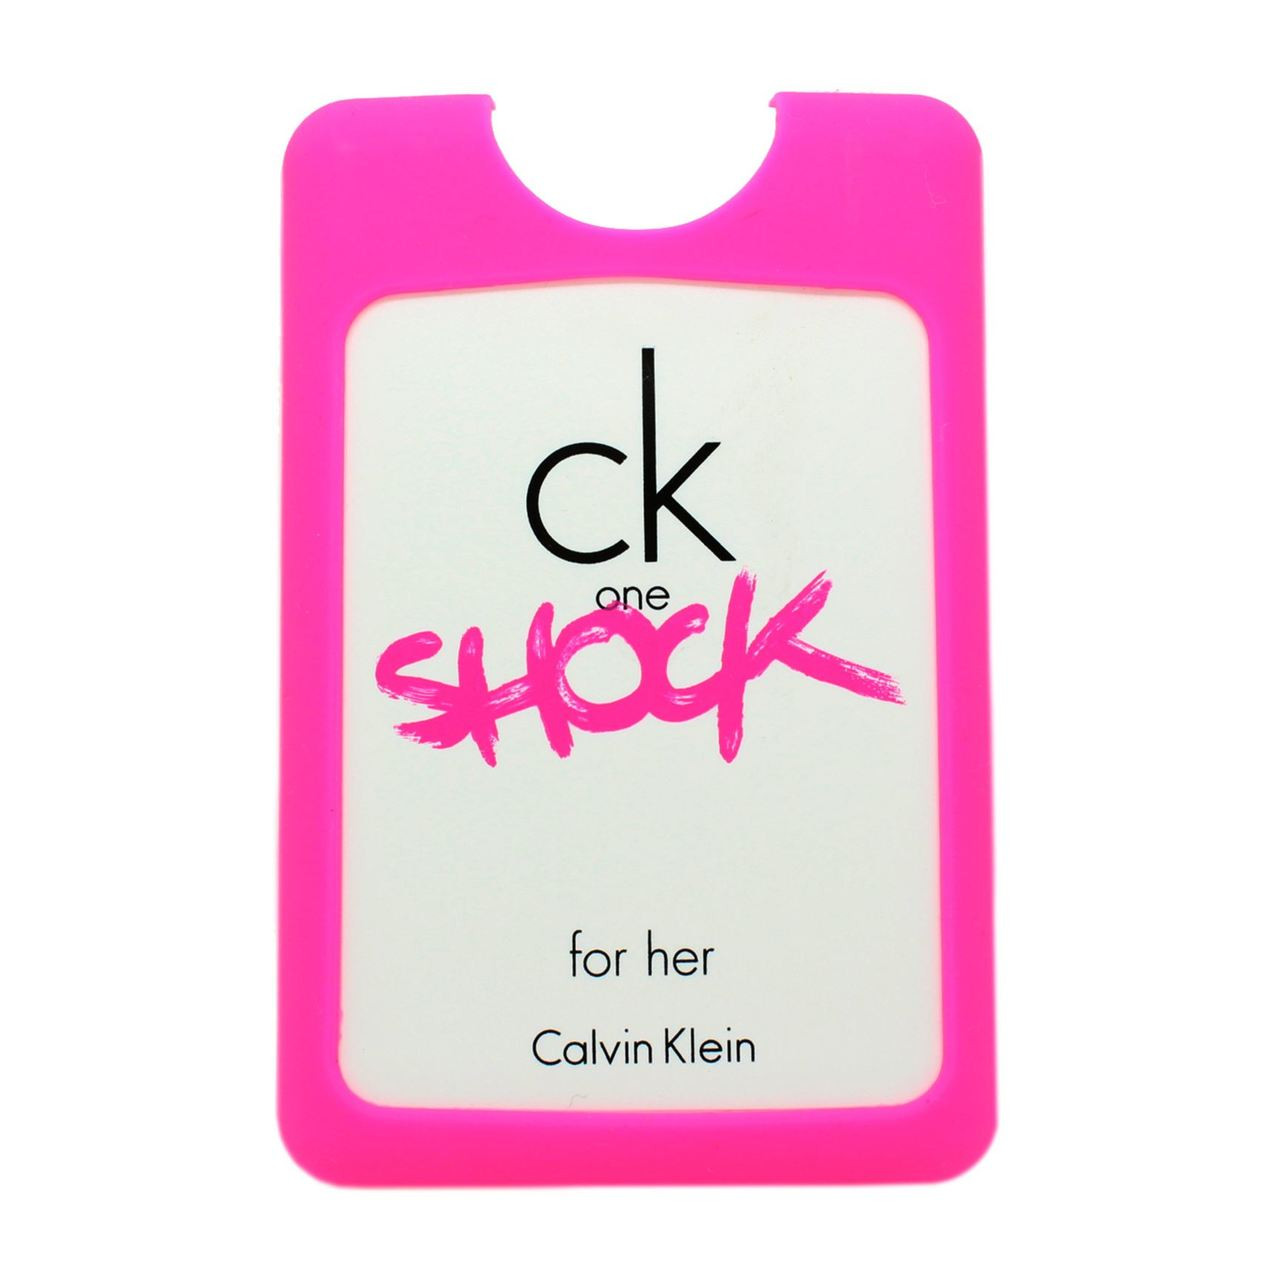 Calvin Klein CK One Shock for Women EDT Travel Spray 20ml - Go Tiny